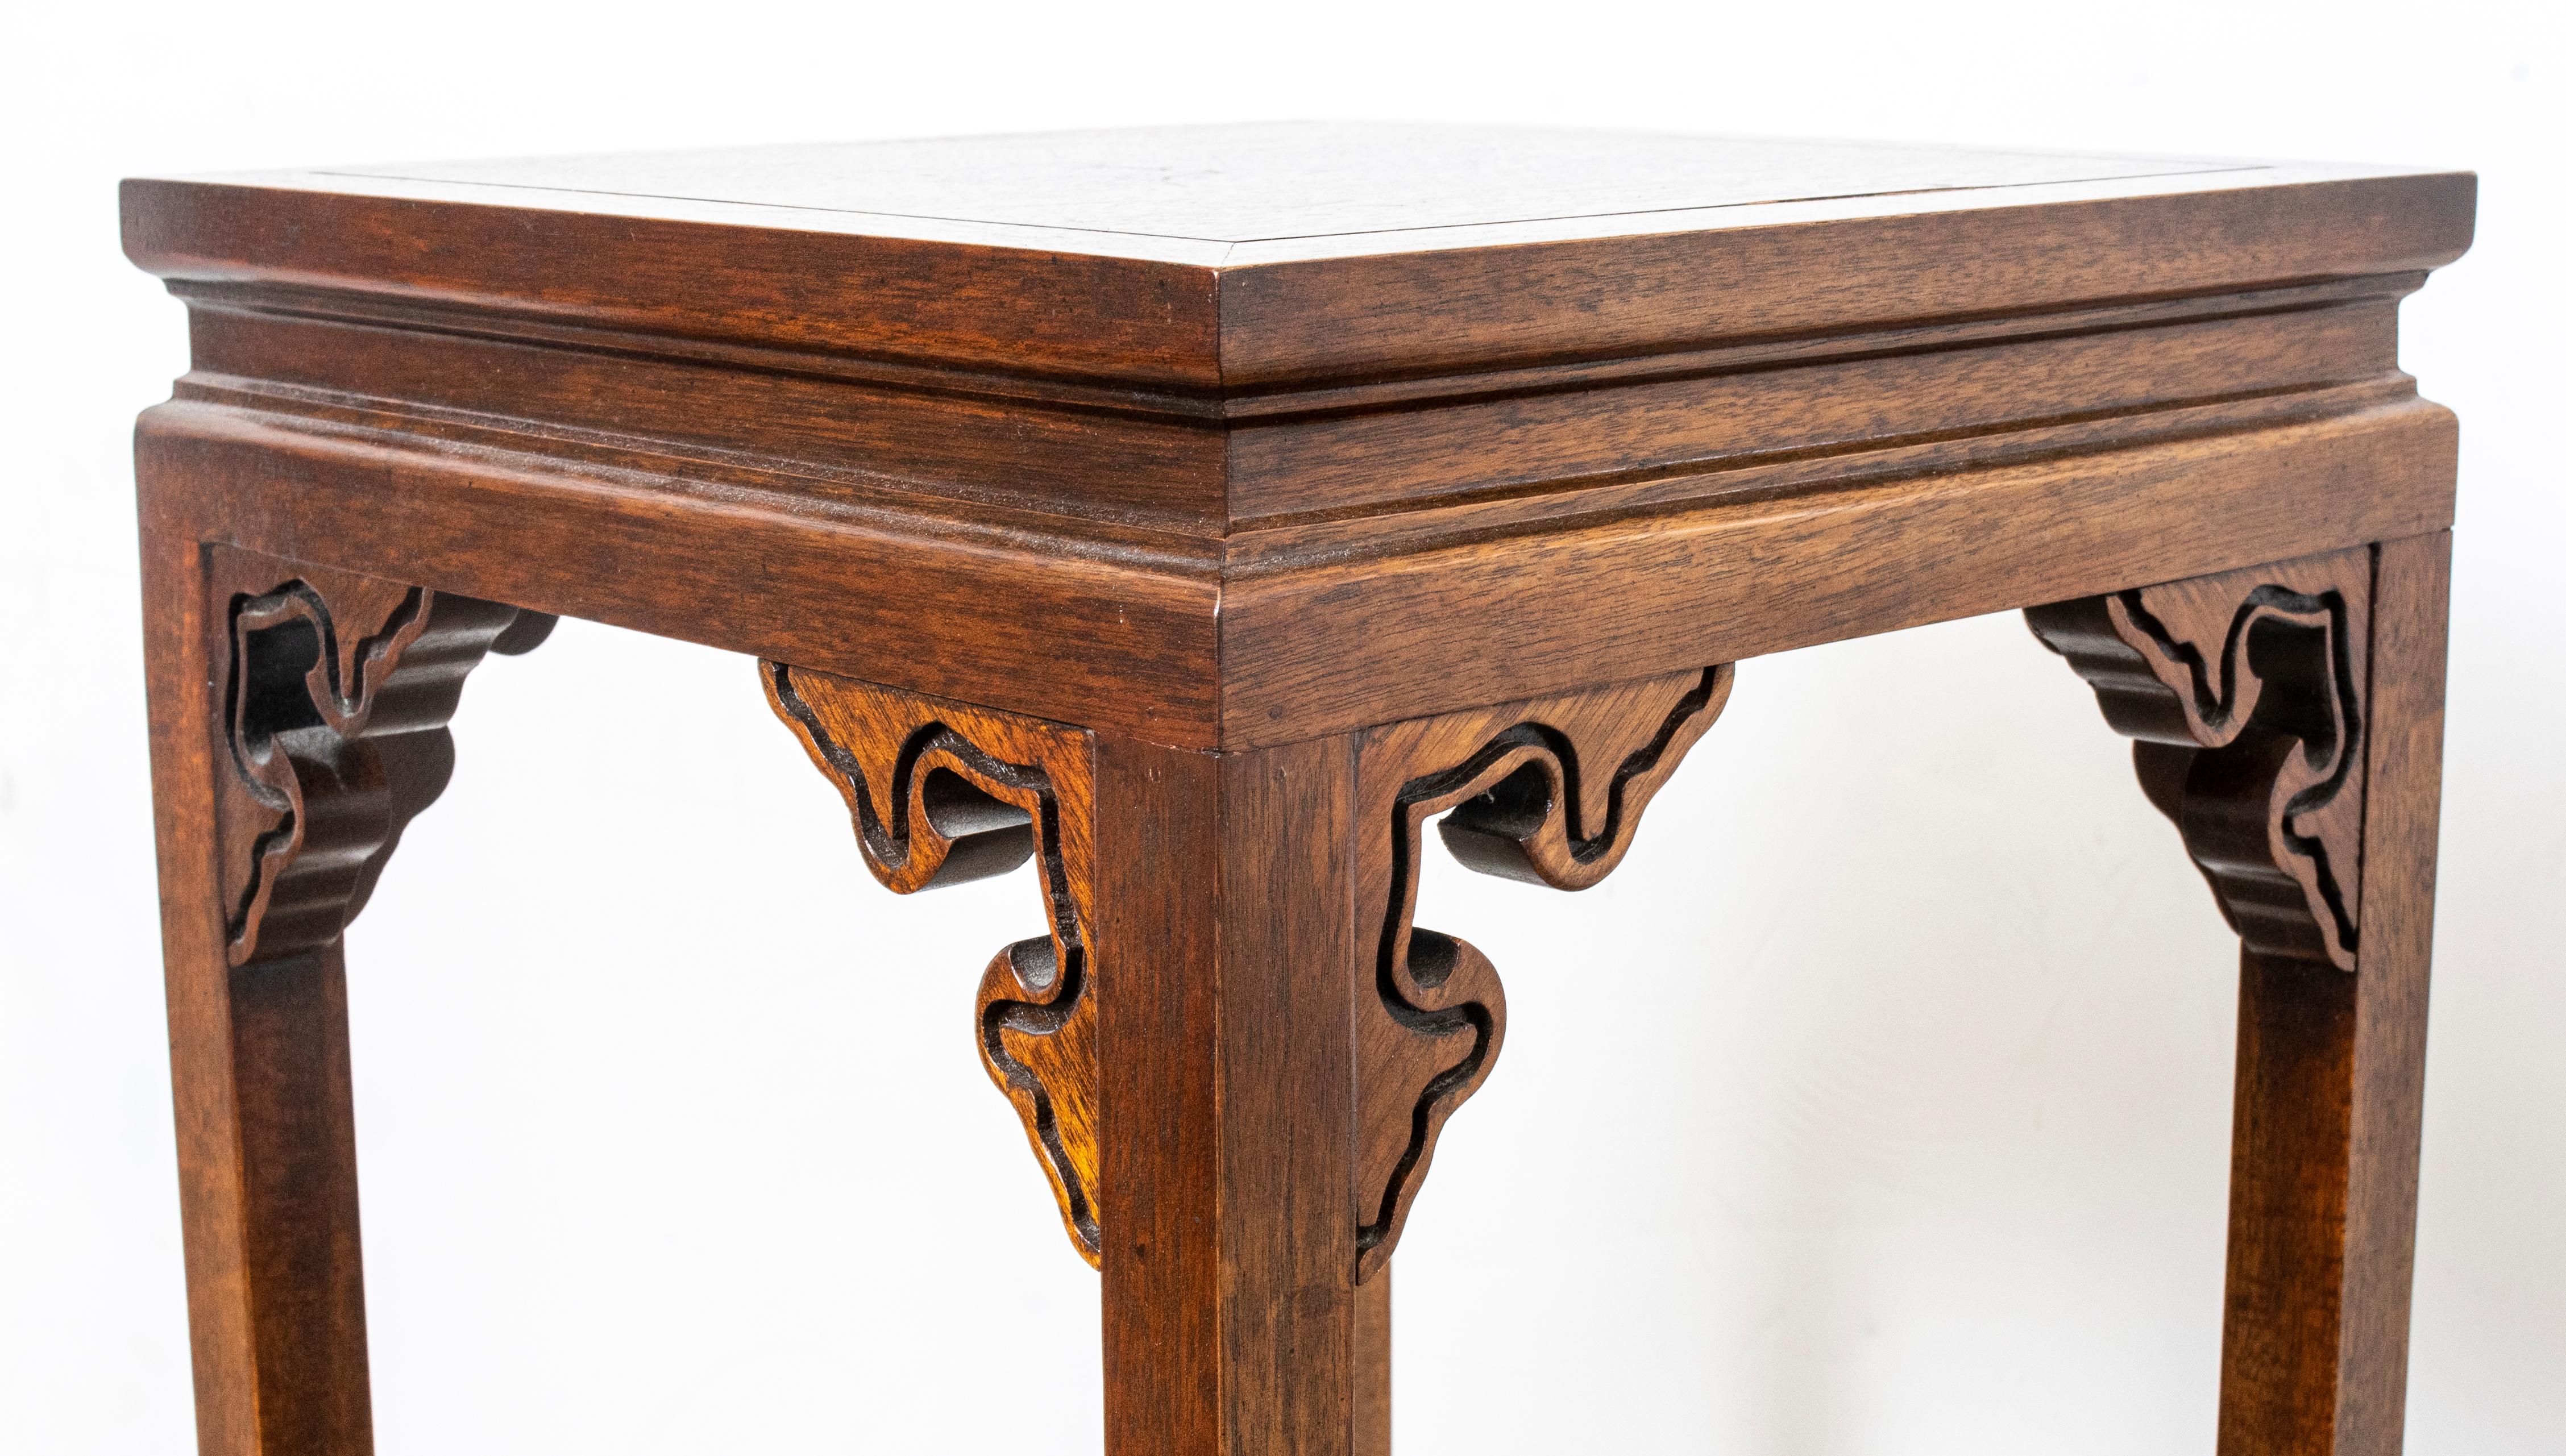 Baker Furniture Asian manner carved wood pedestal table with square top, makers mark on bottom. Measures: 32